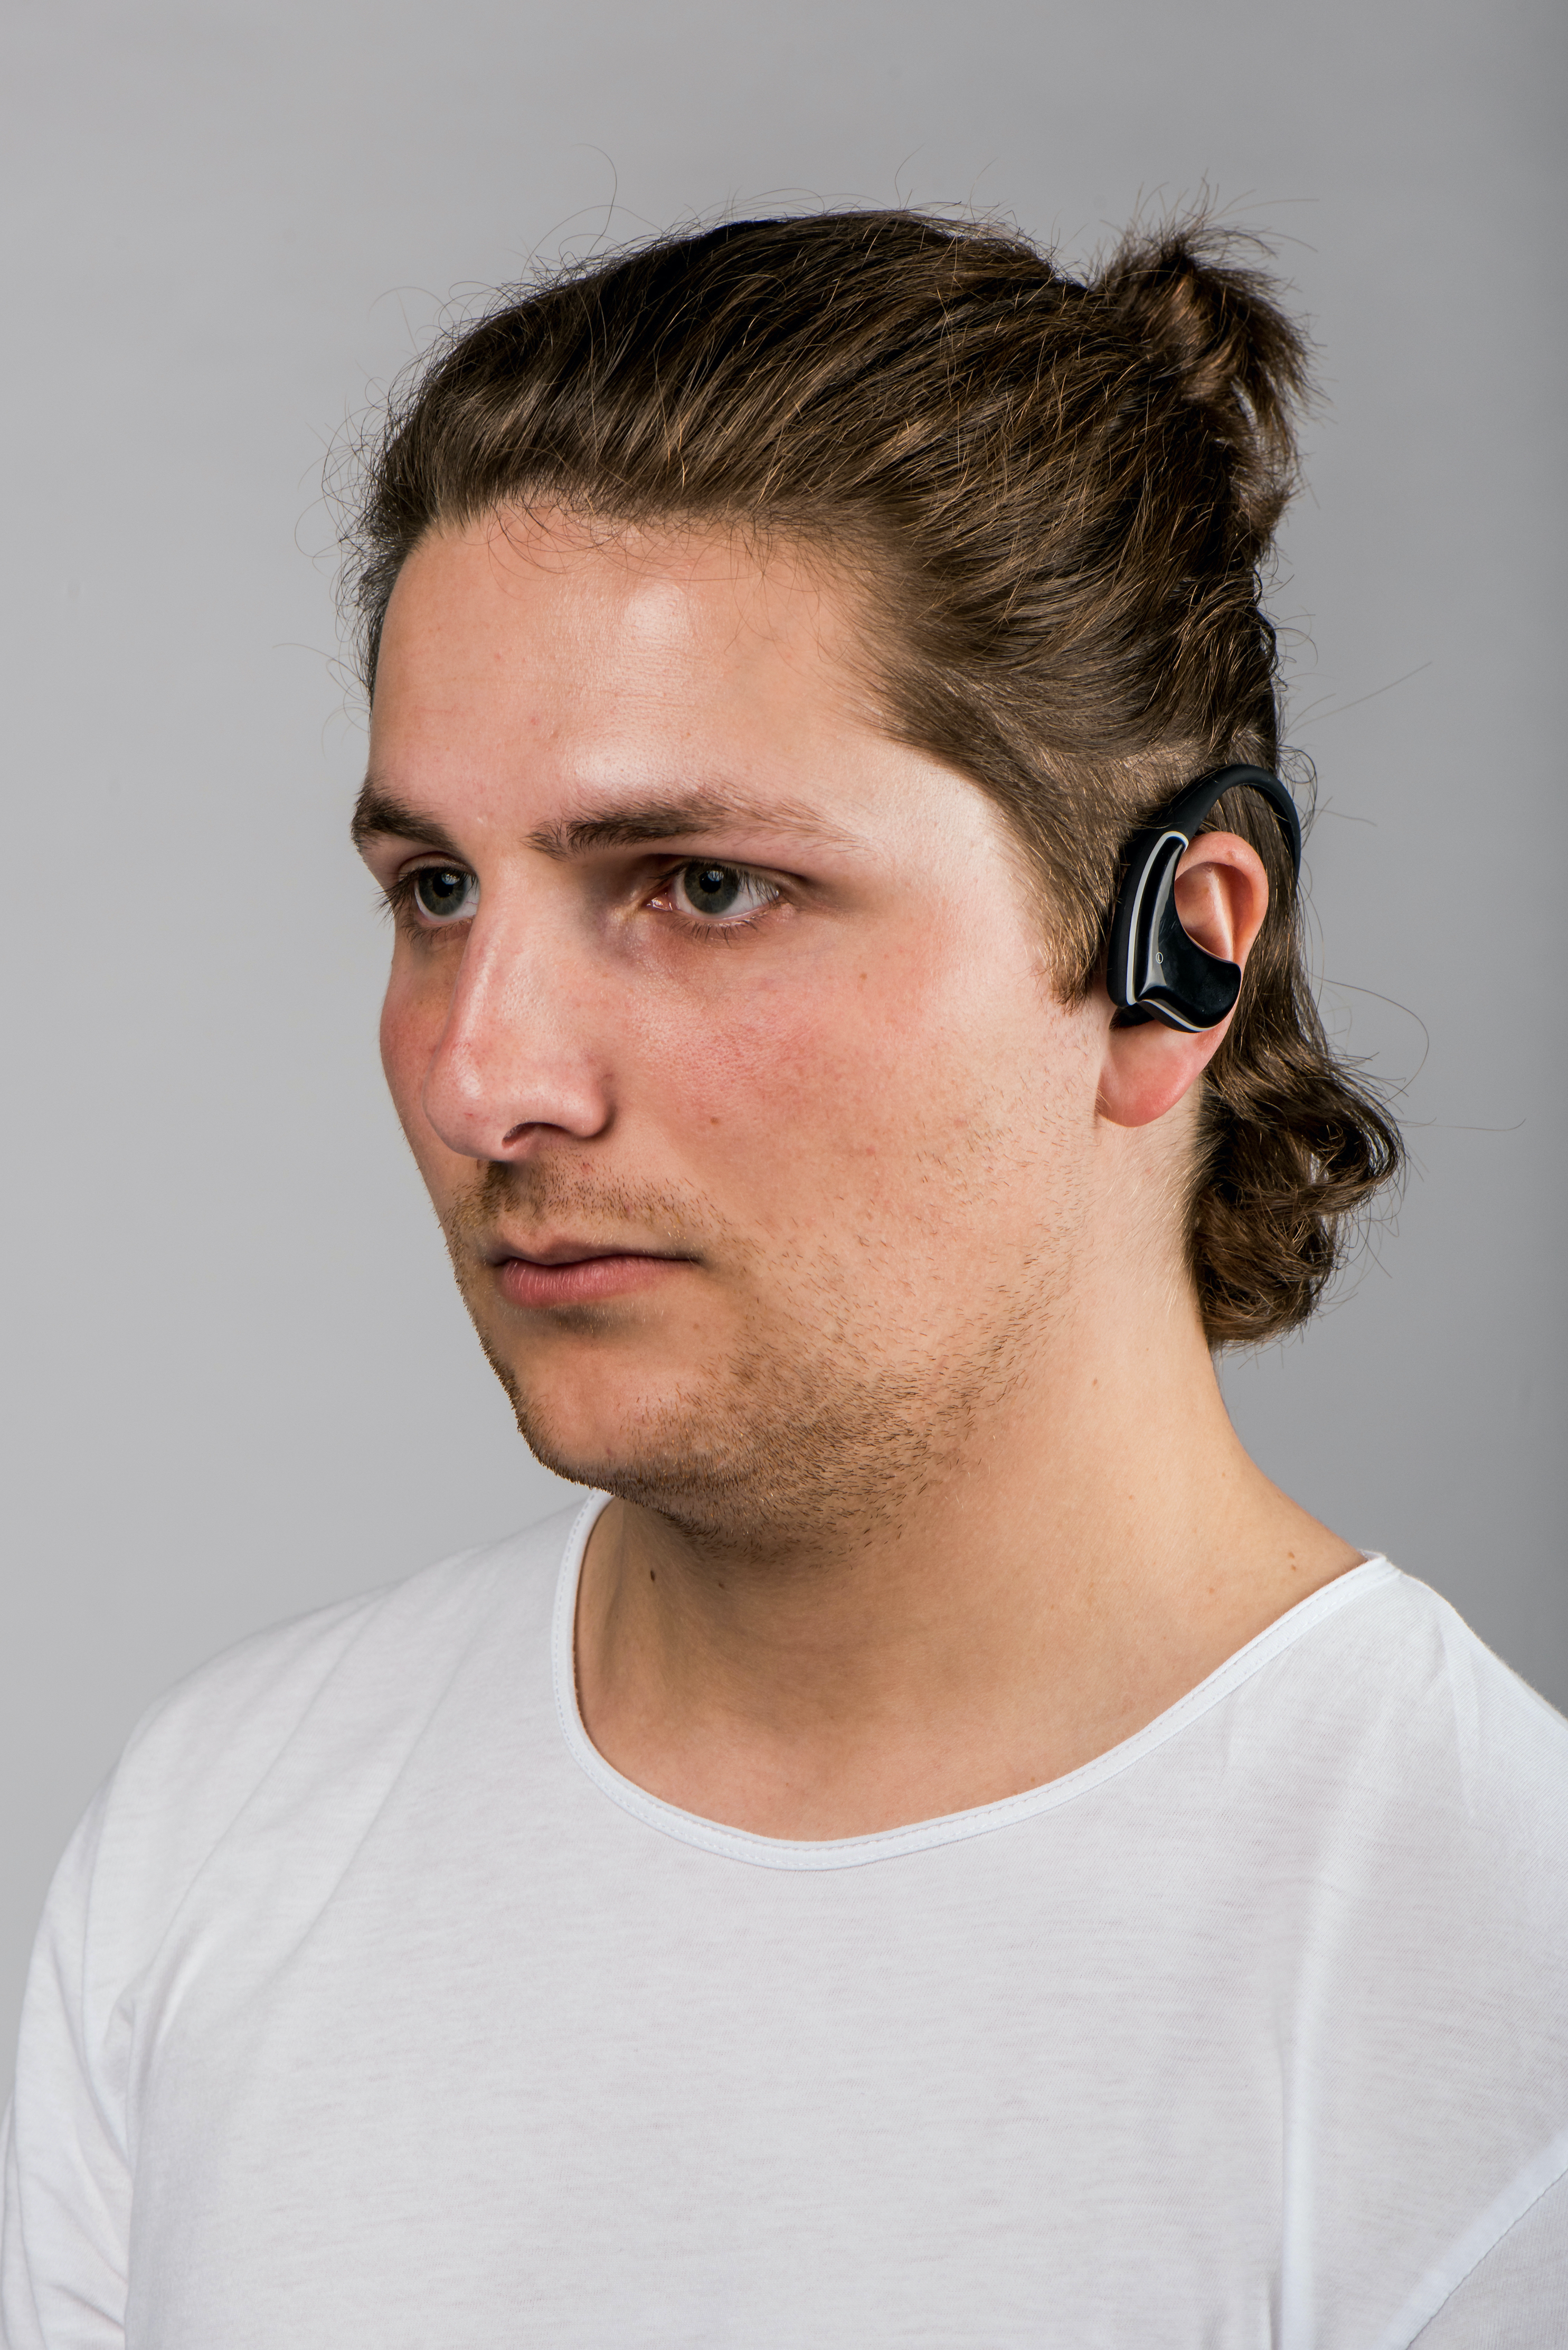 LENCO BTX-750BK - IPX4 - Schwarz-Grau Bluetooth Bluetooth -, In-ear Micro-SD-Karte 8GB Headphone